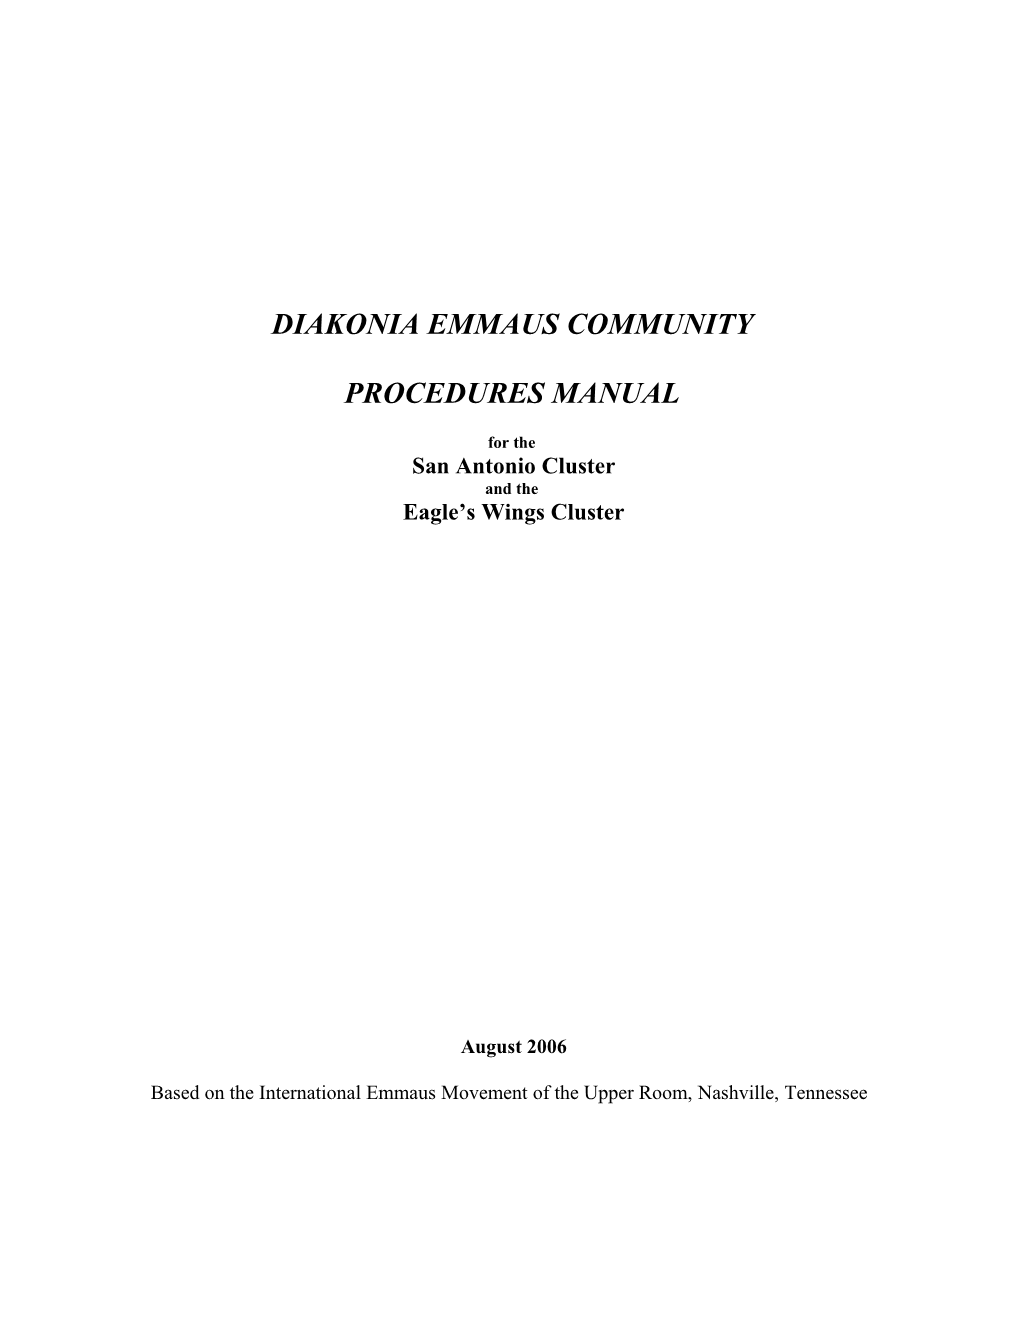 Diakonia Emmaus Community